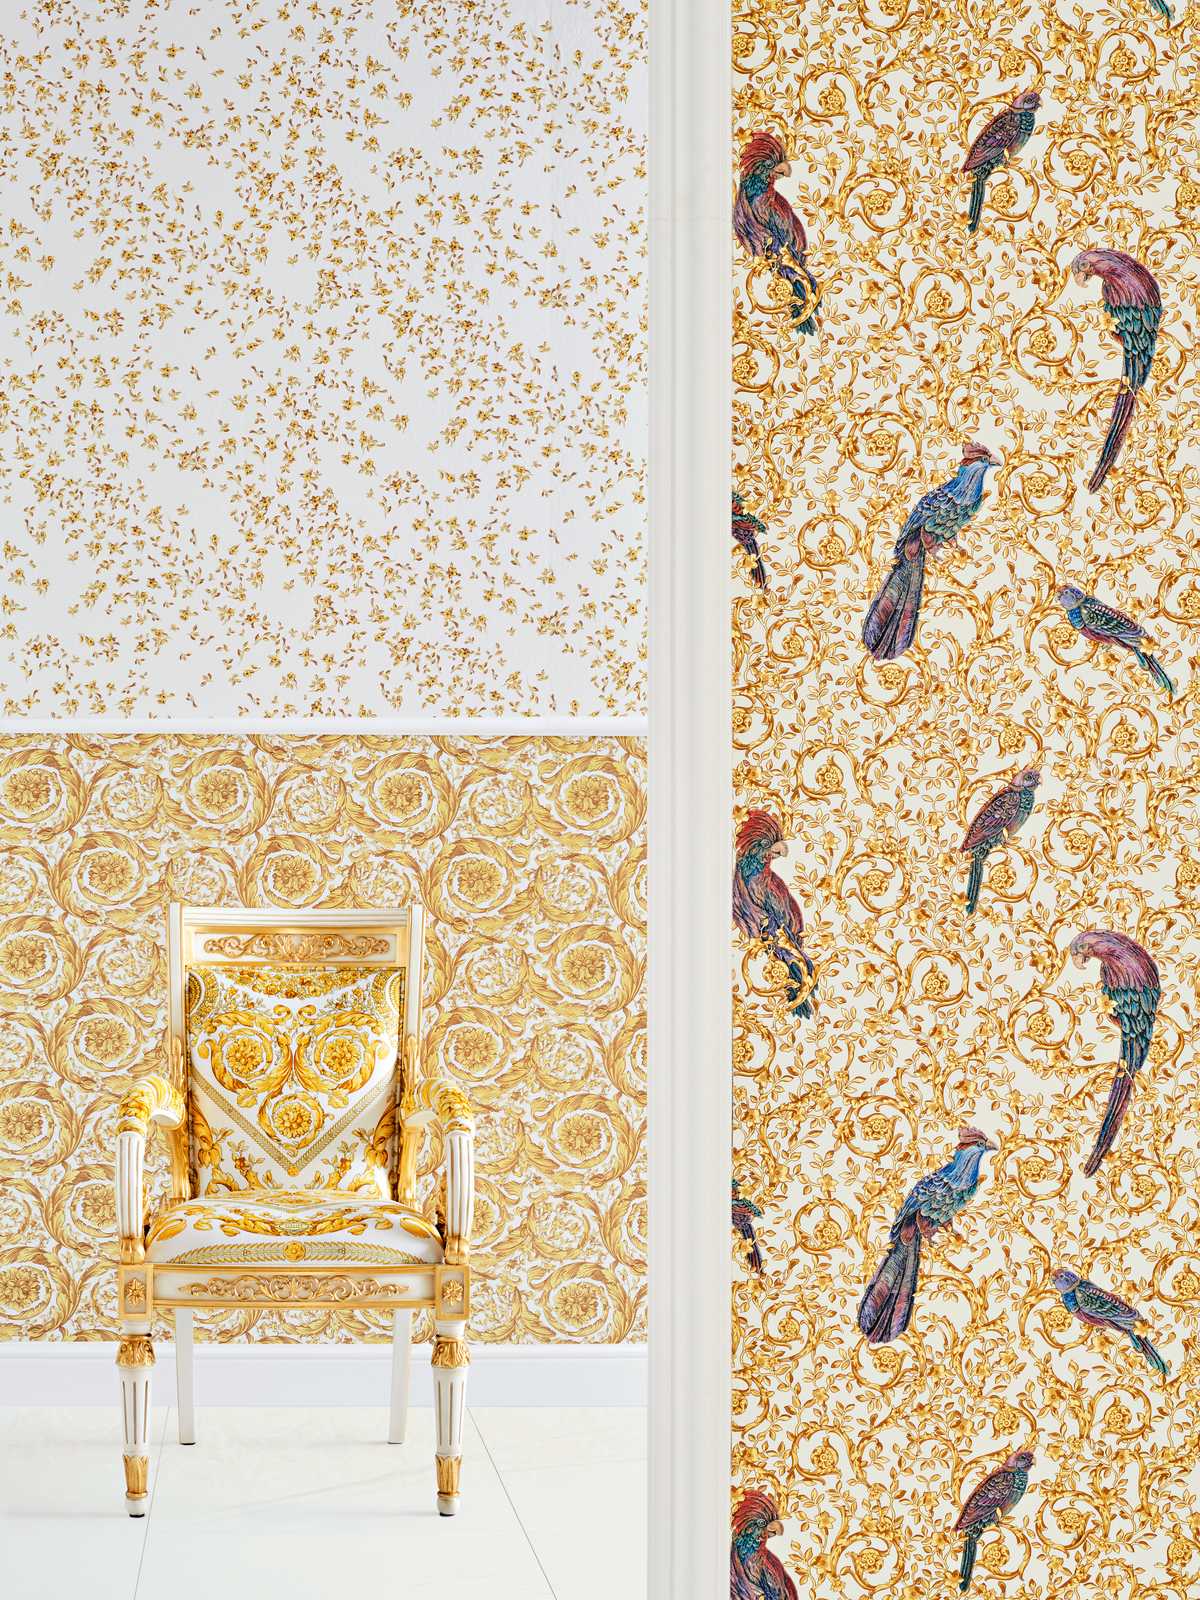             VERSACE Home wallpaper paradise birds & golden accents - gold, purple, cream
        